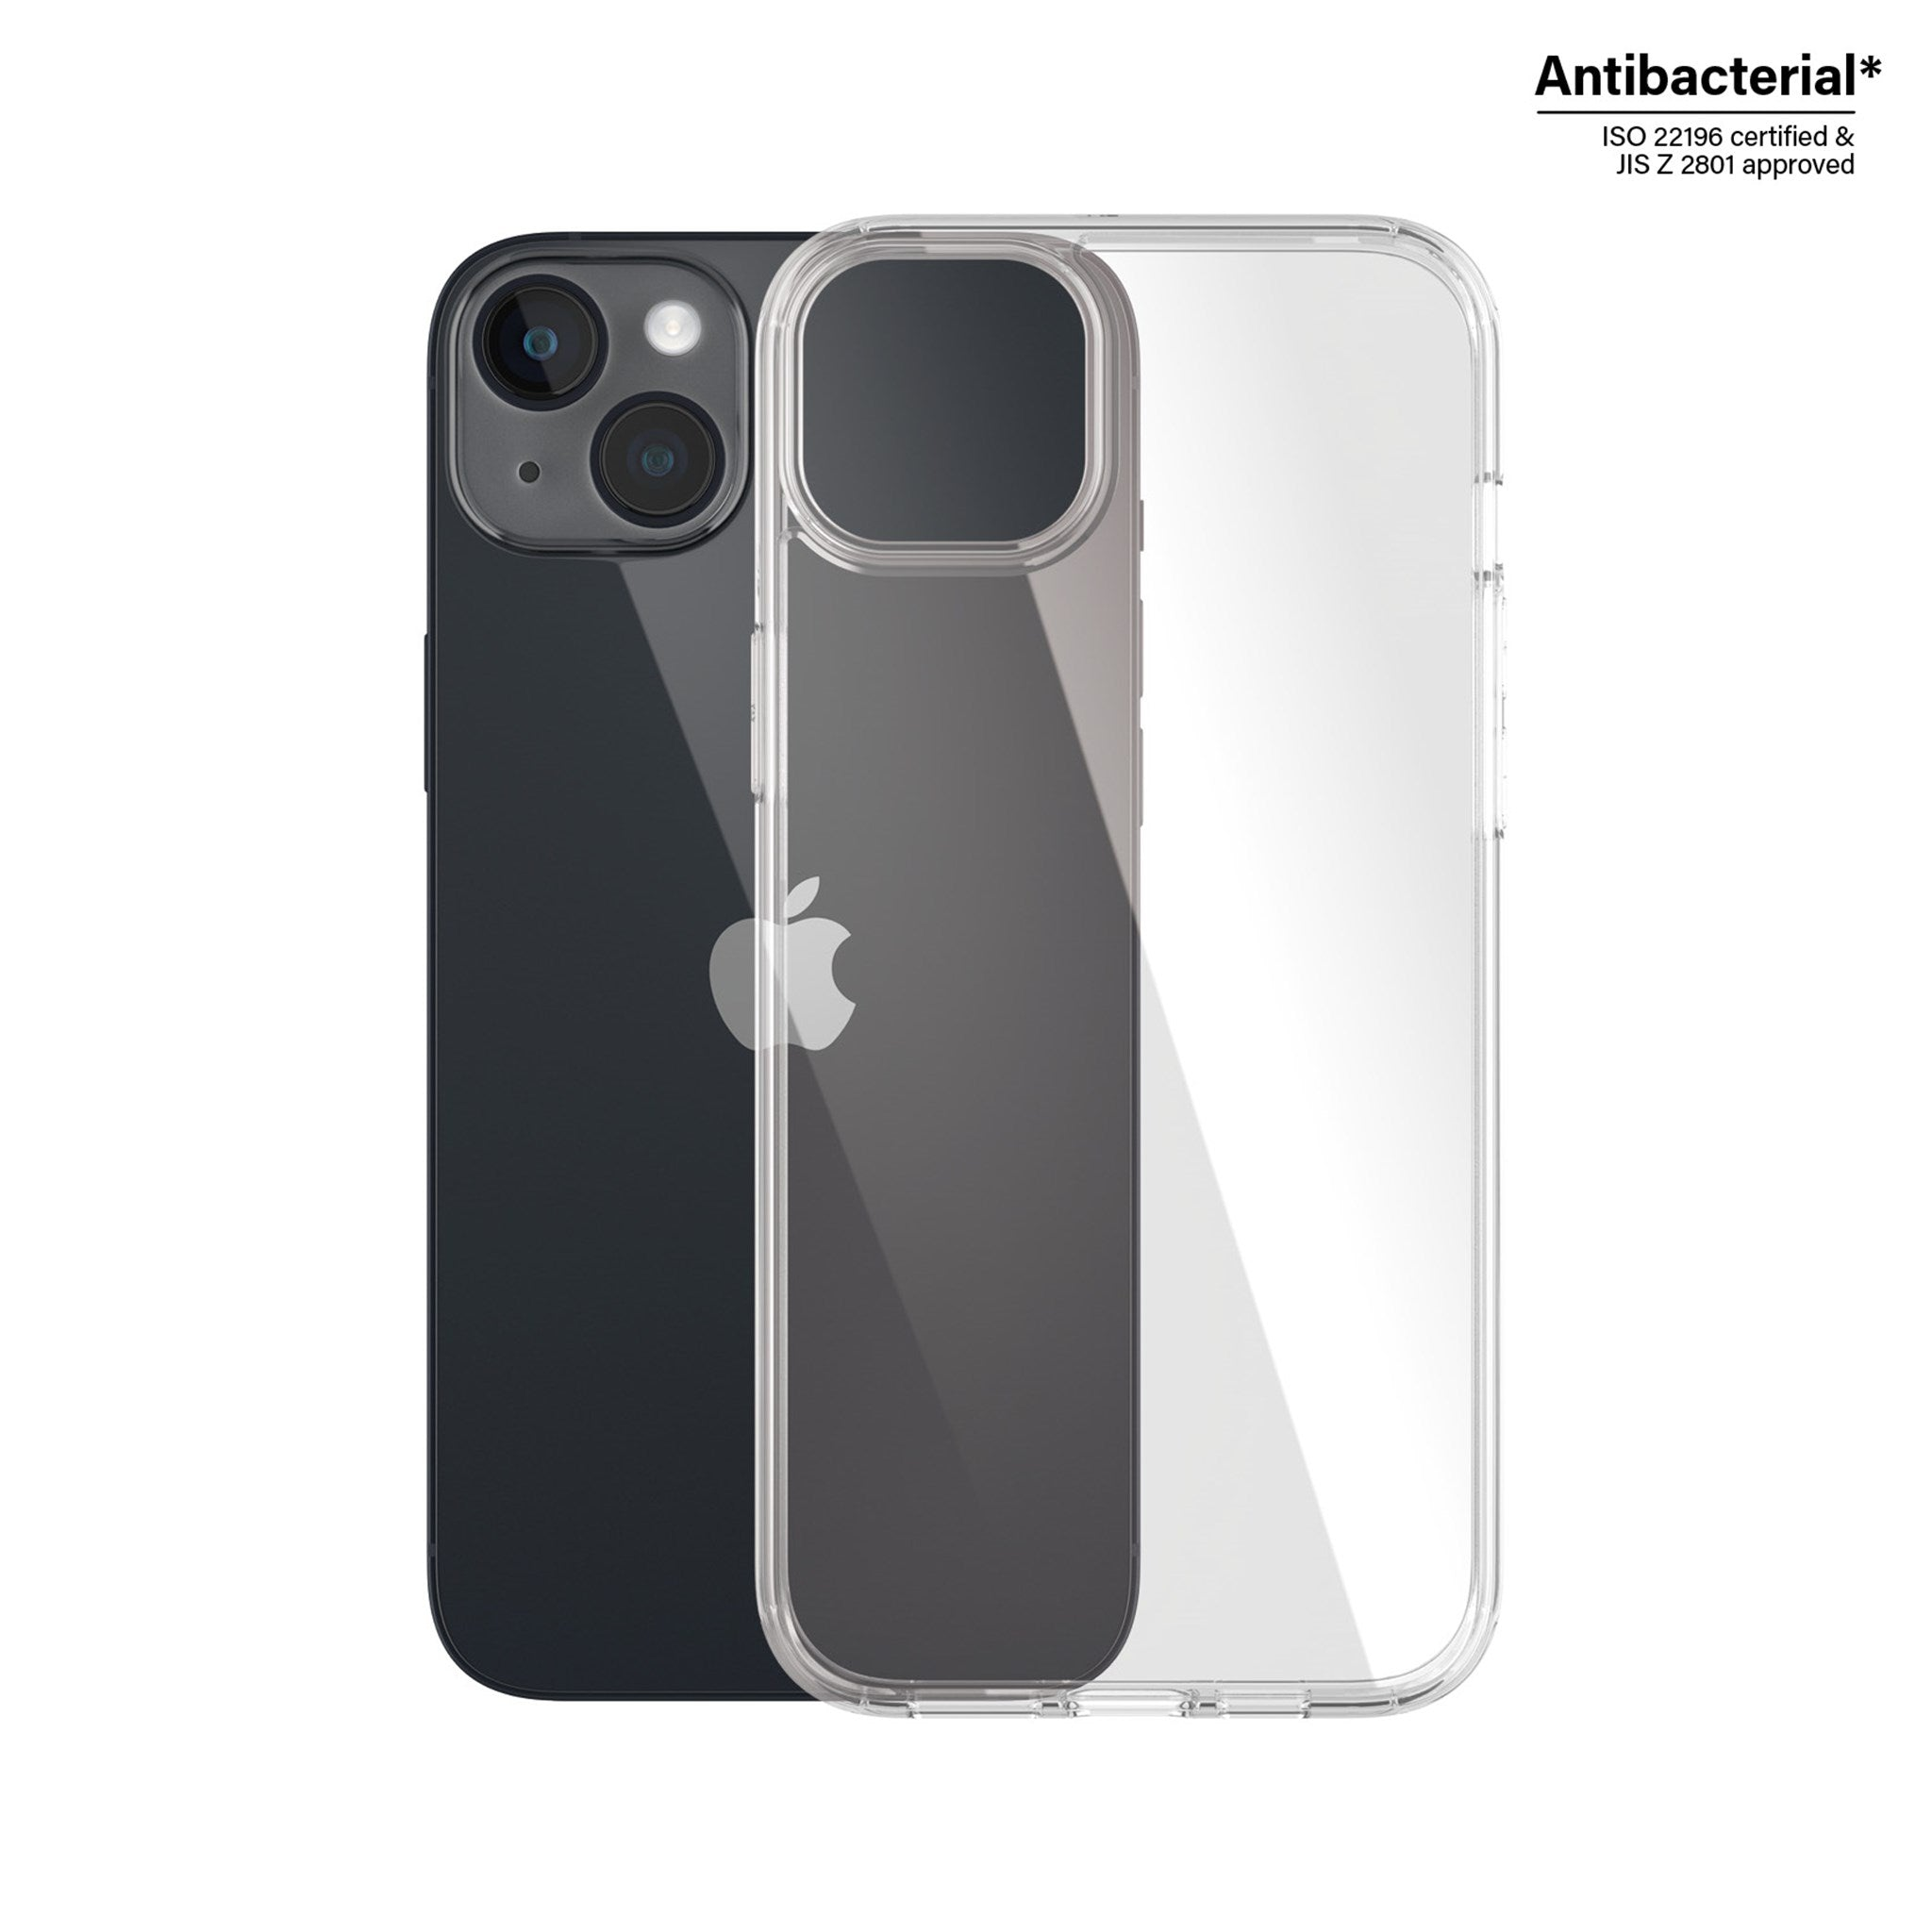 Apple, Plus, Backcover, 14 Transparent iPhone PANZERGLASS HardCase,